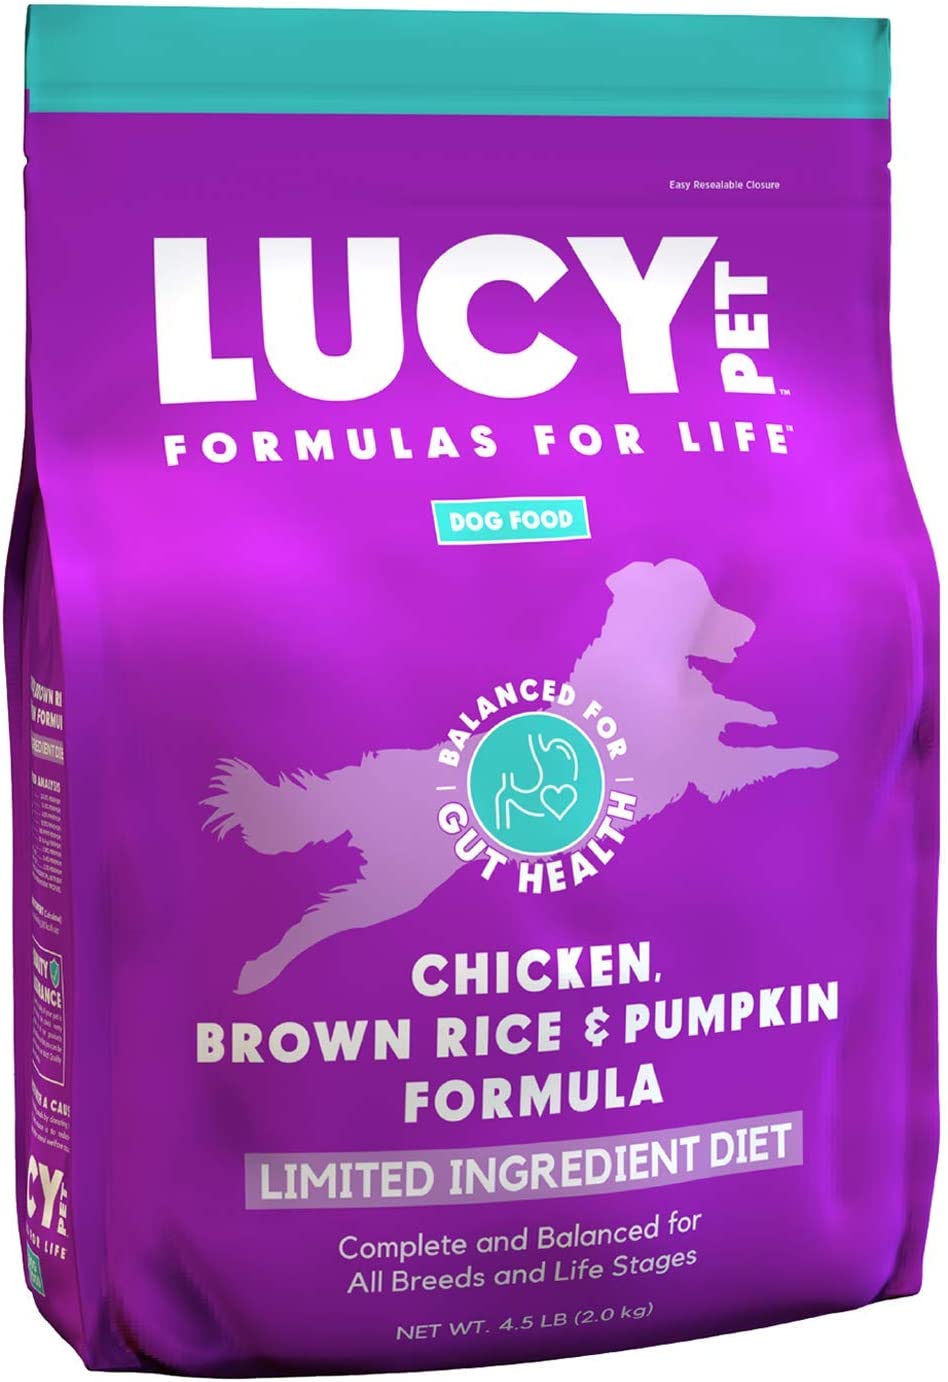 Lucy Pet Chicken, Brown Rice & Pumpkin, Dry Dog Food